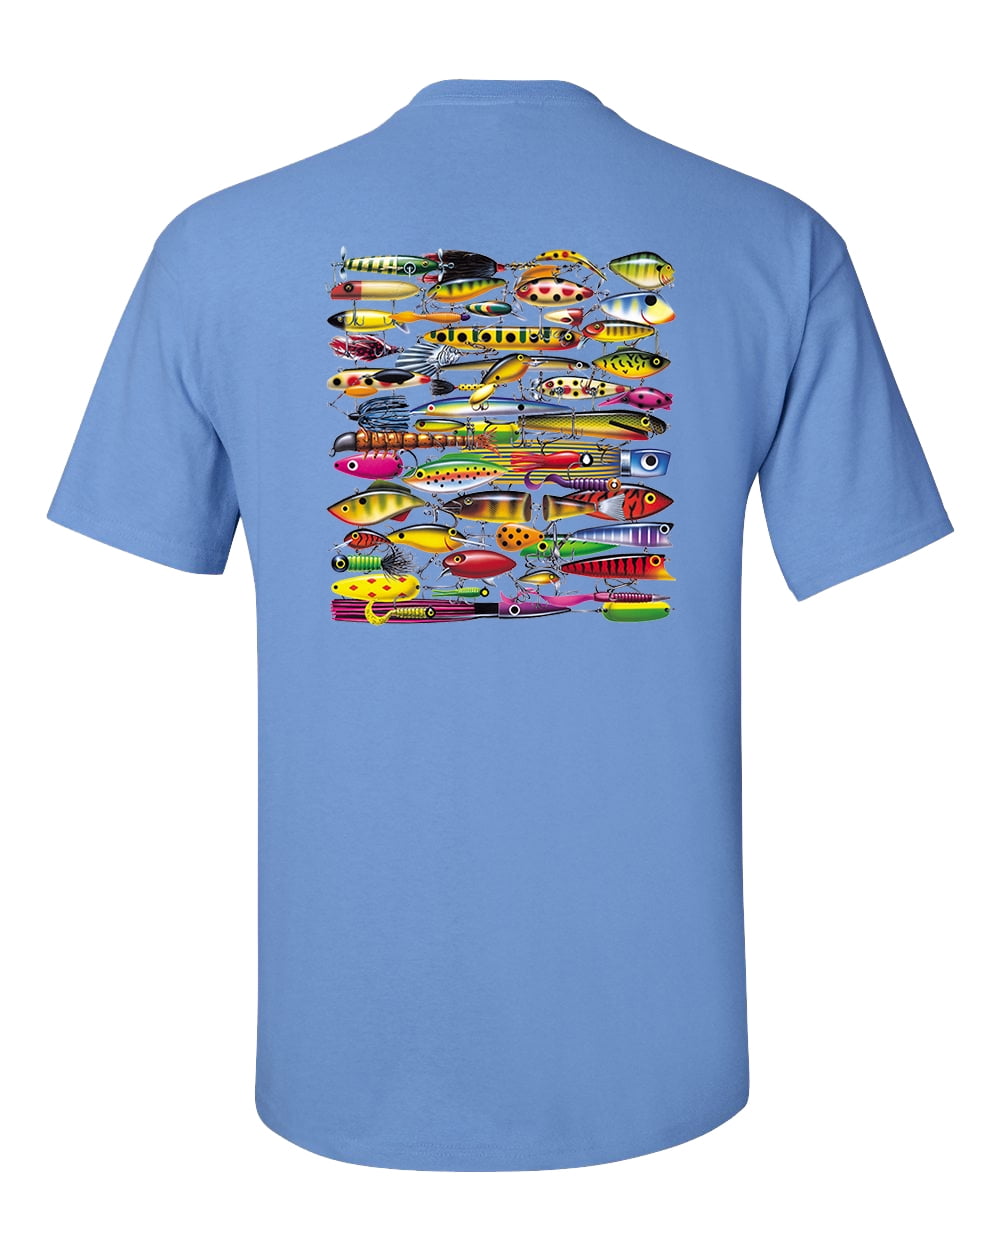 Fishing Shirt, The Tug Is The Drug, Fly Fishing Apparel, Trout Fish Tshirt, Fishing  Shirt For Men, Trendy Fishing T, Fly Fishing Clothes, Peach, XL 